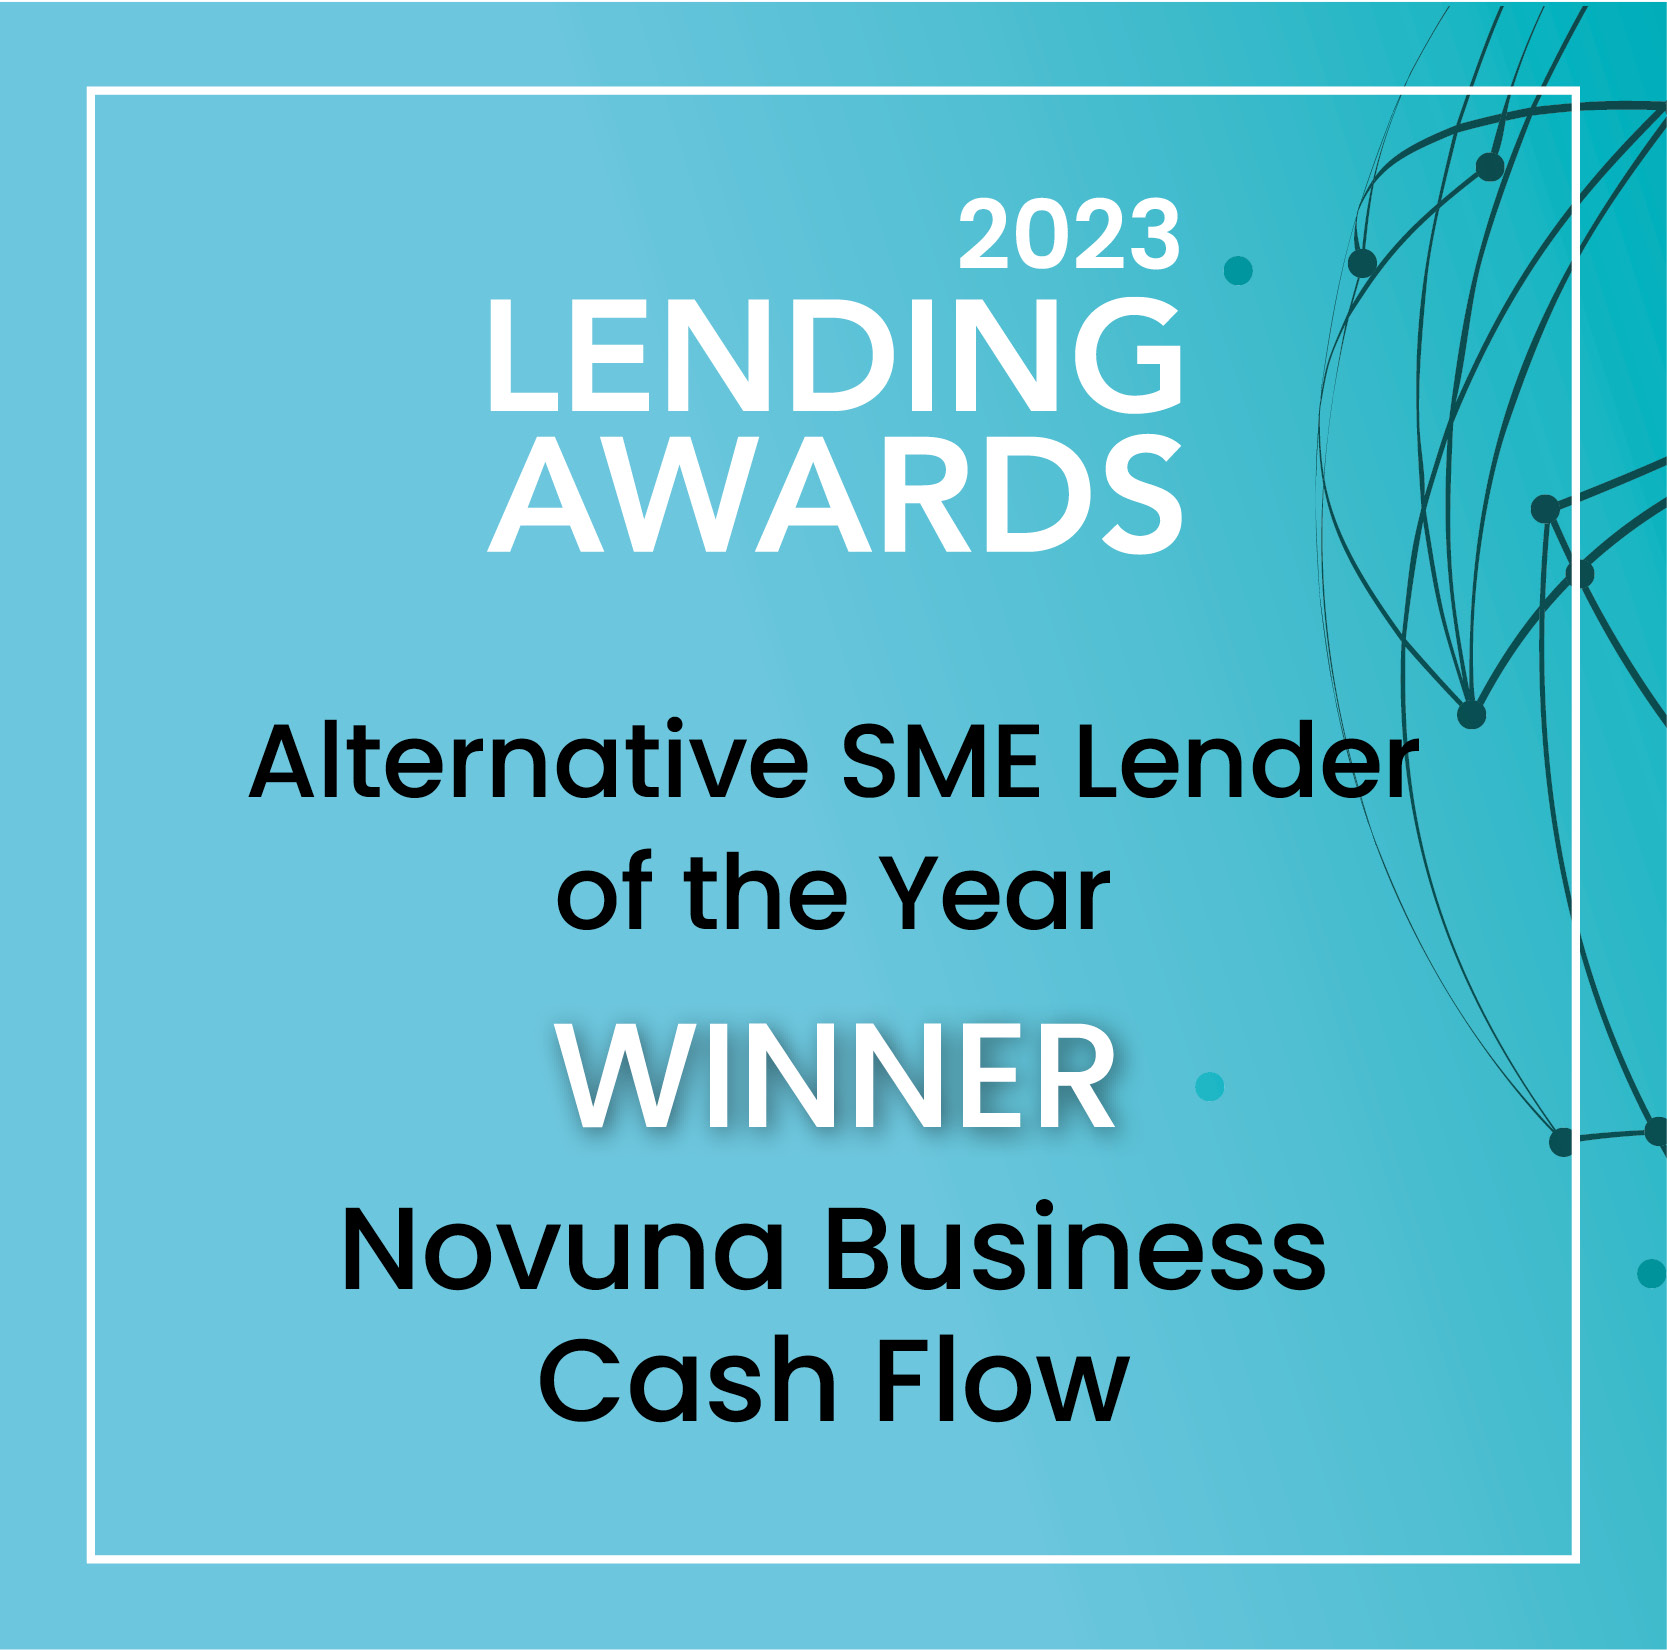 Alternative SME Lender of the Year